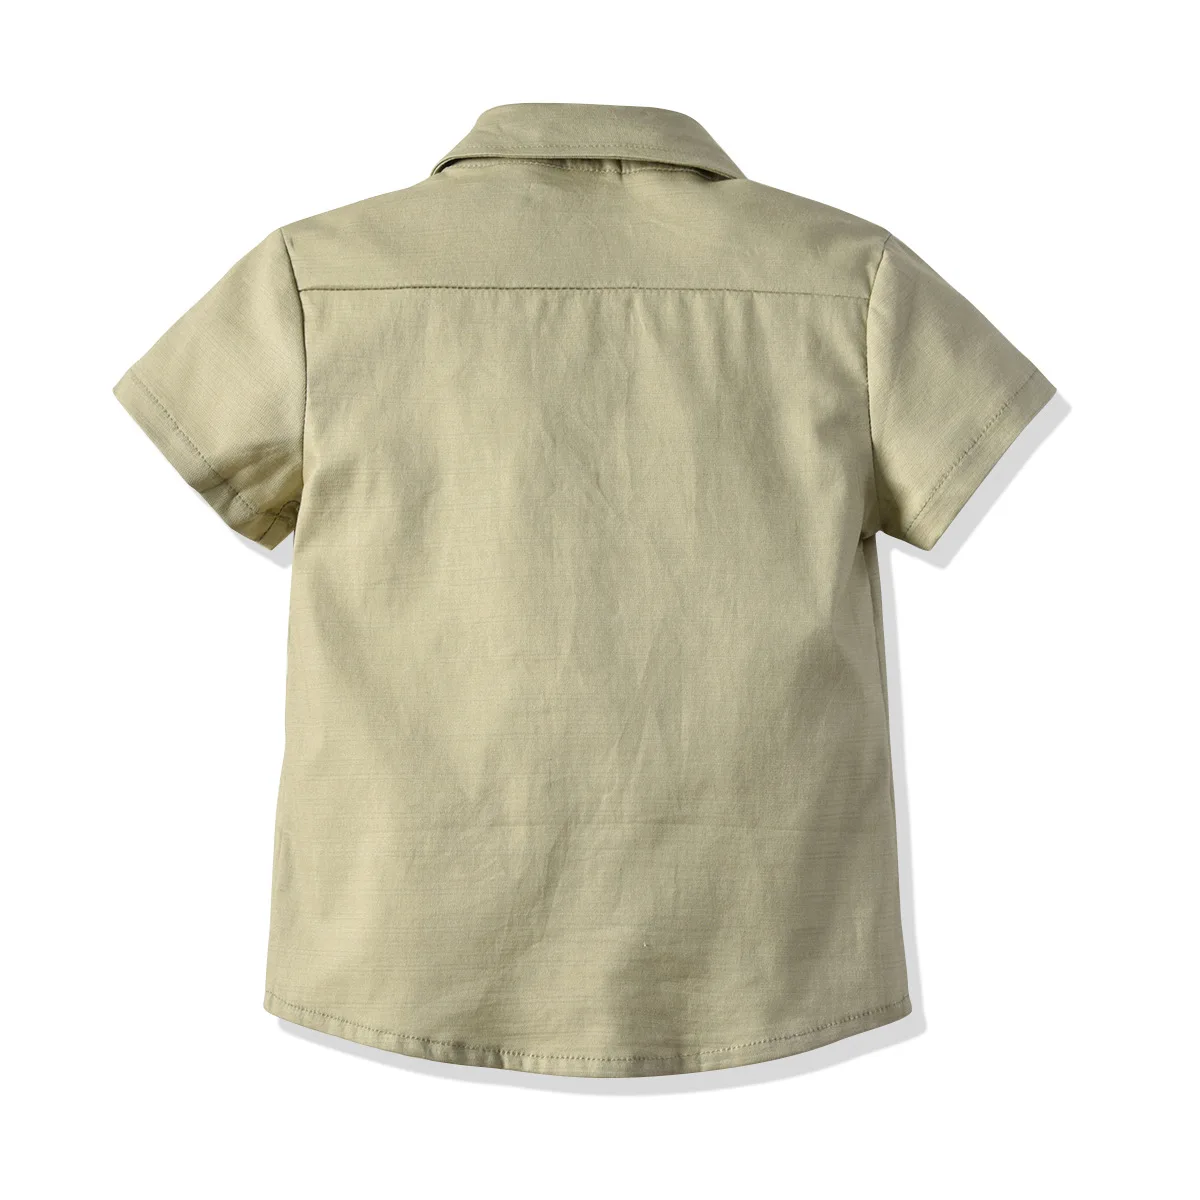 BOY'S Clothes with Short Sleeves Cotton Shirt New Style Gentleman Bowtie Childrenswear CHILDREN'S Shirt Child Cardigan Two-Piece